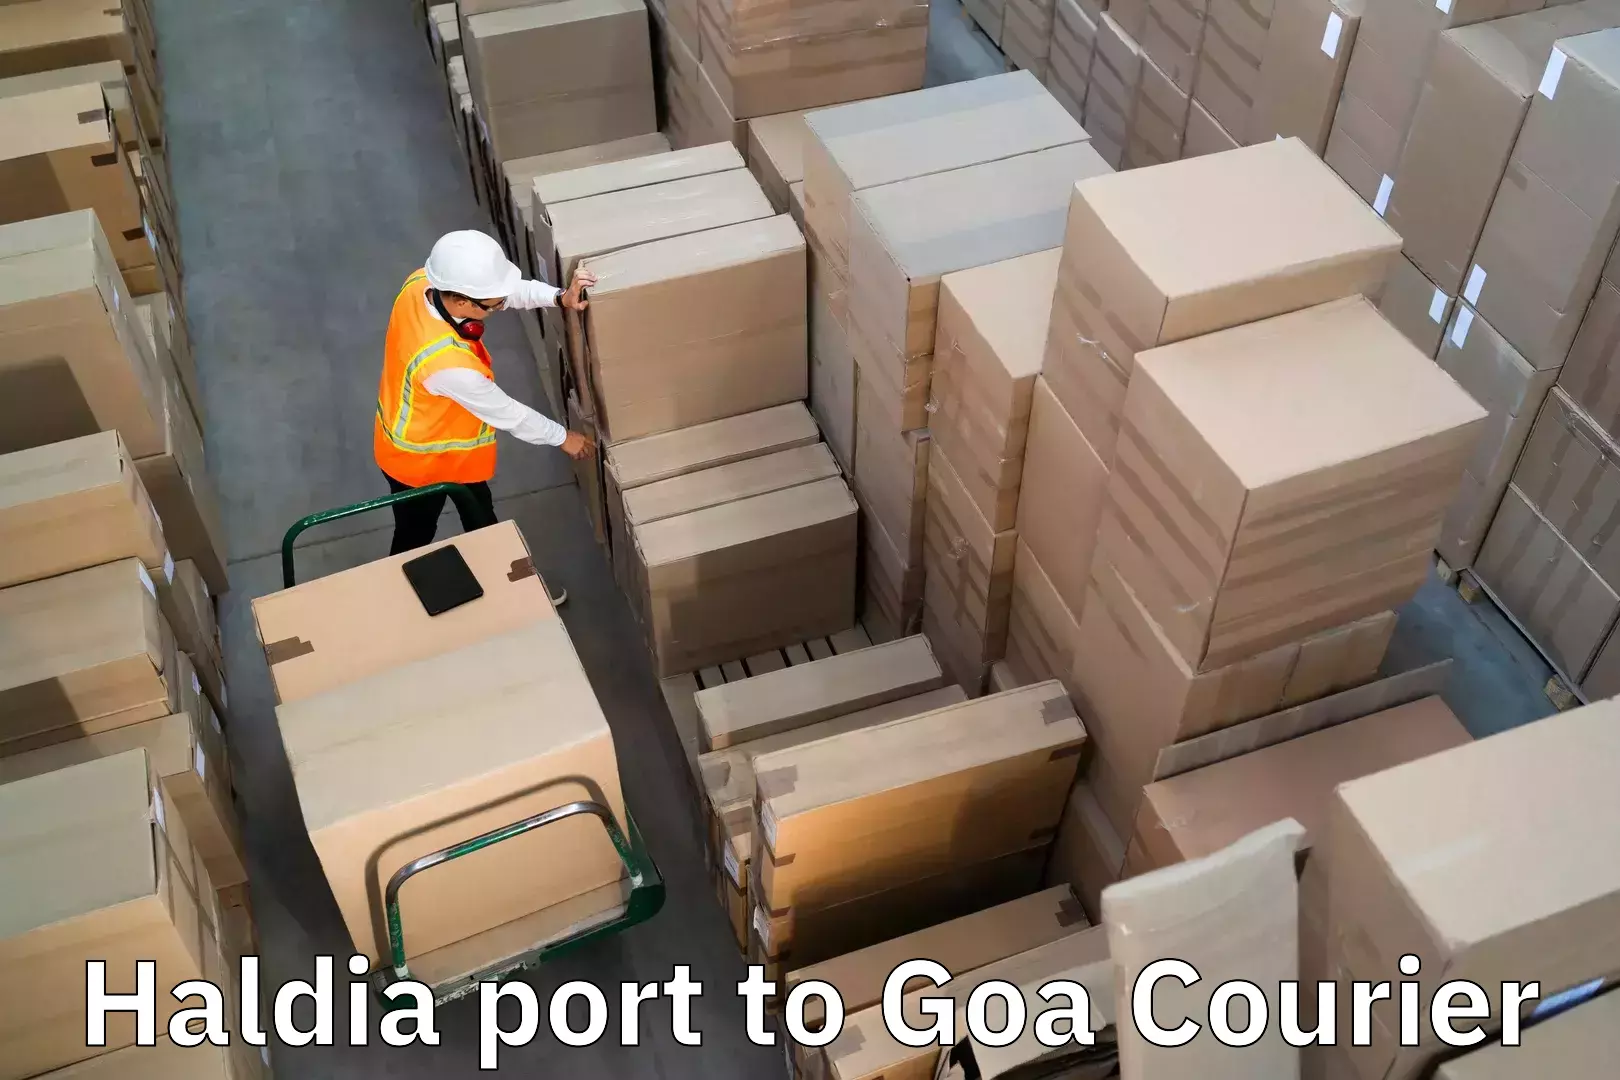 Luggage transit service Haldia port to Goa